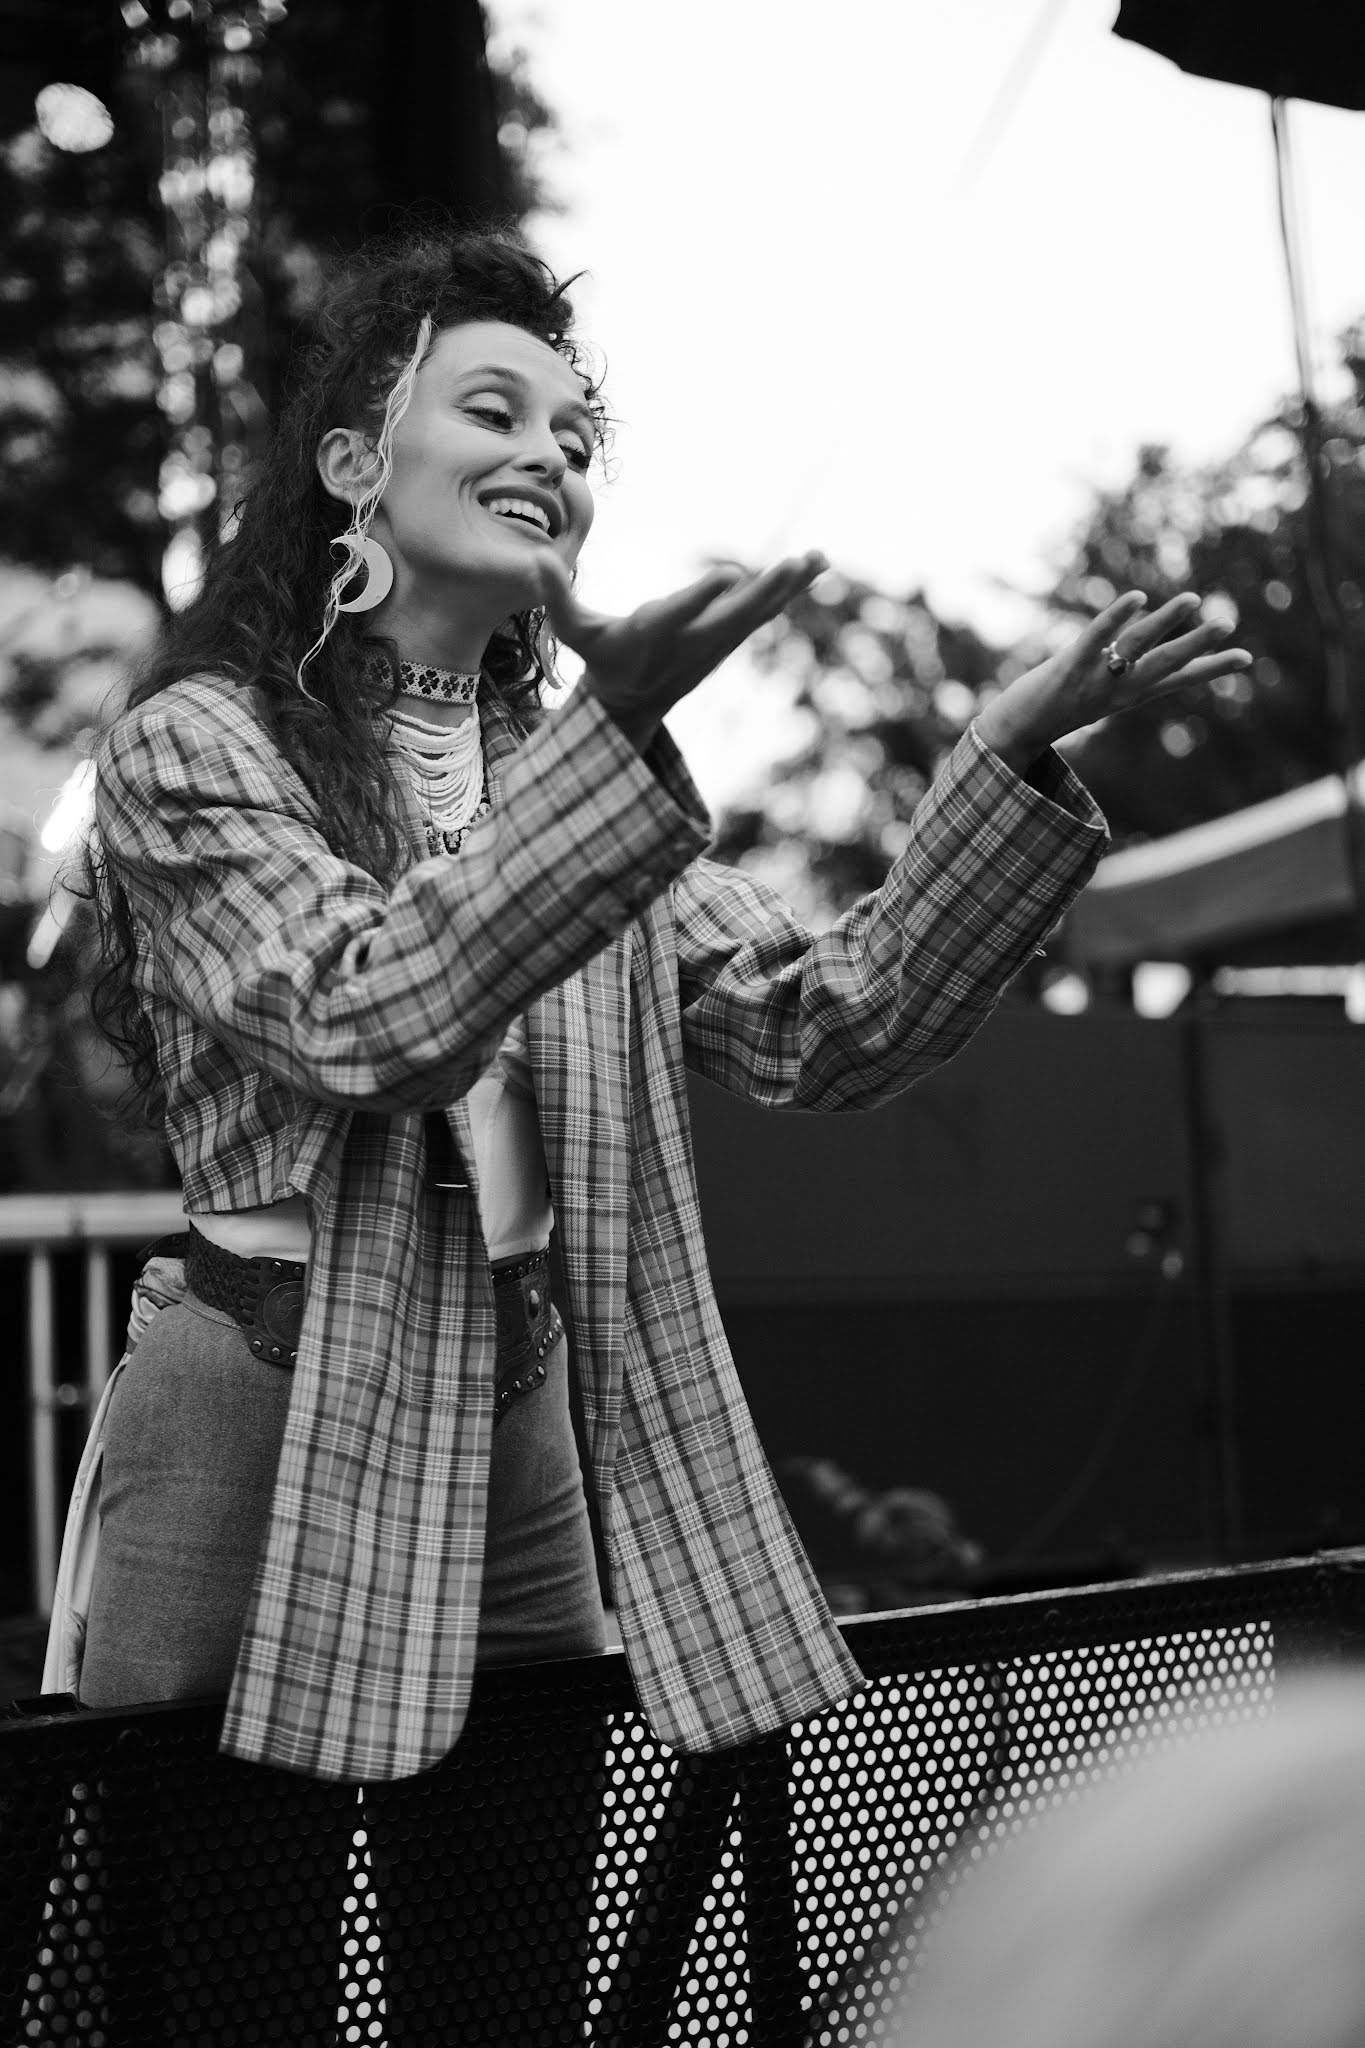 Alina Pash at Sofia Live Festival